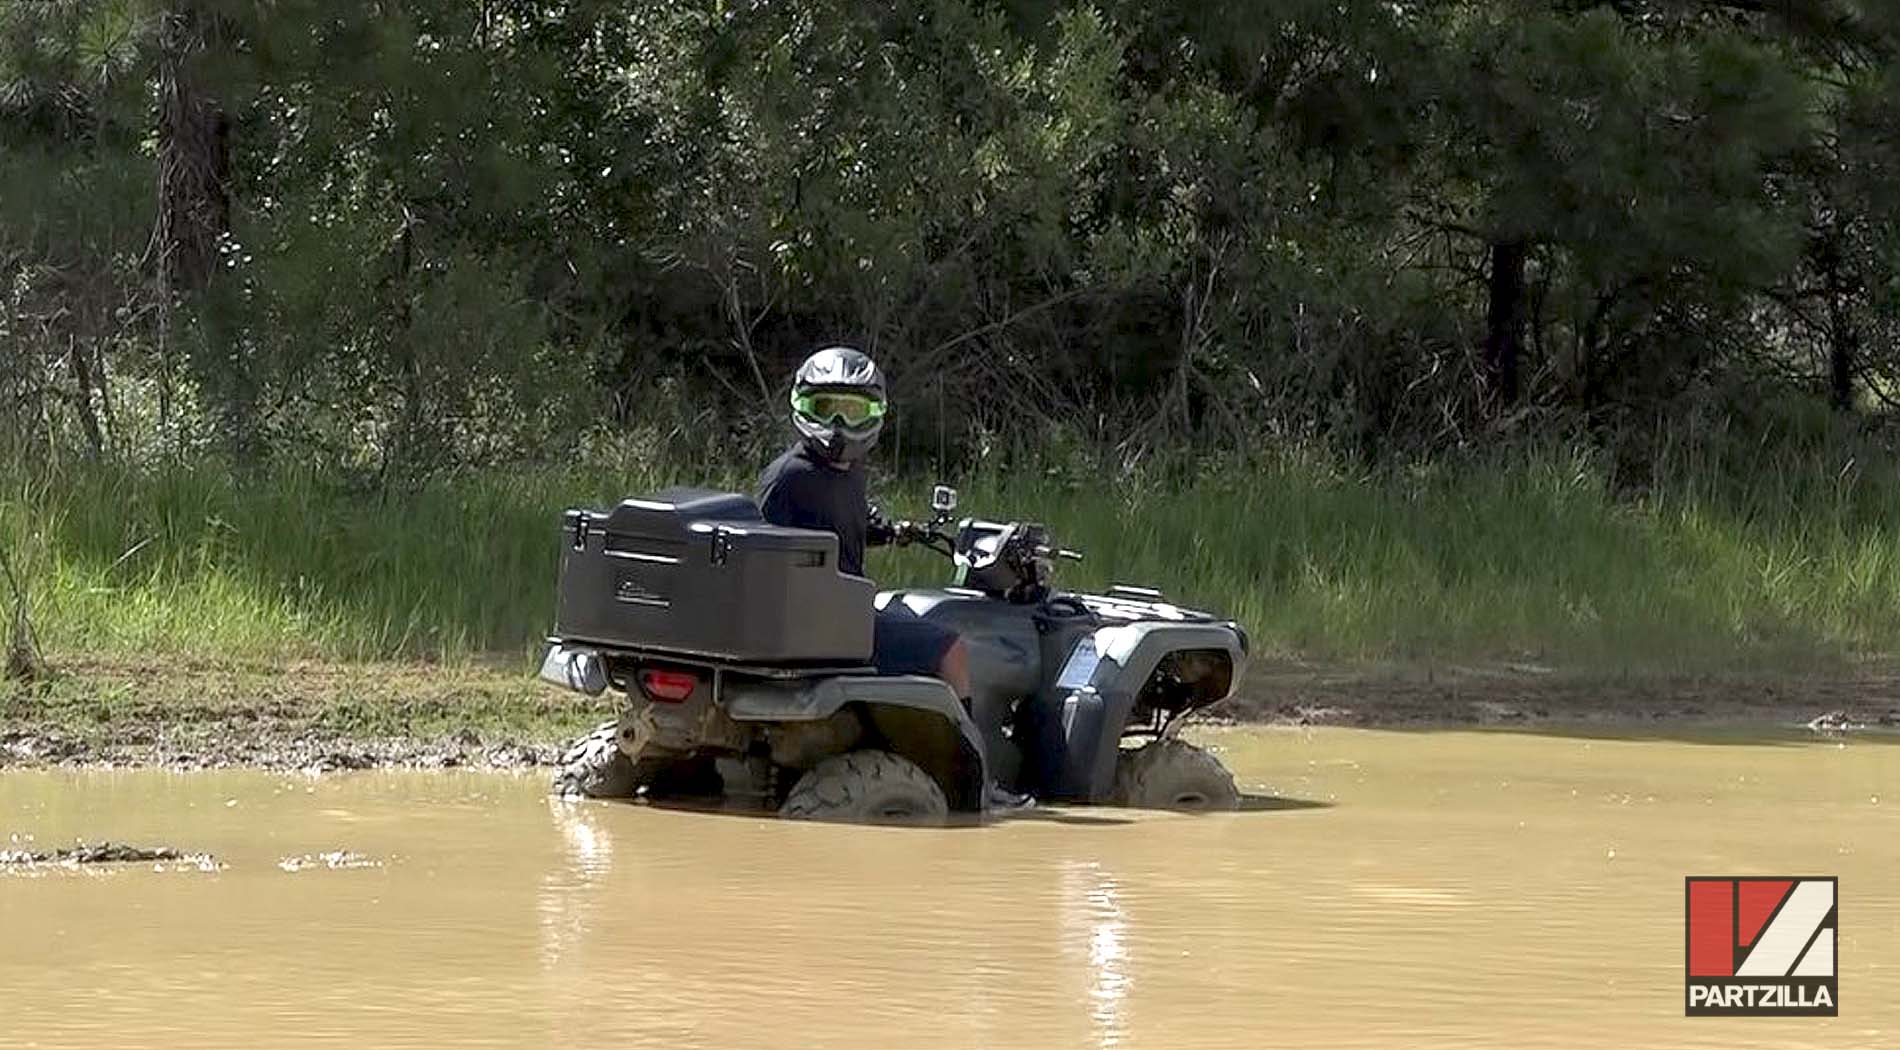 ATV stuck in mud